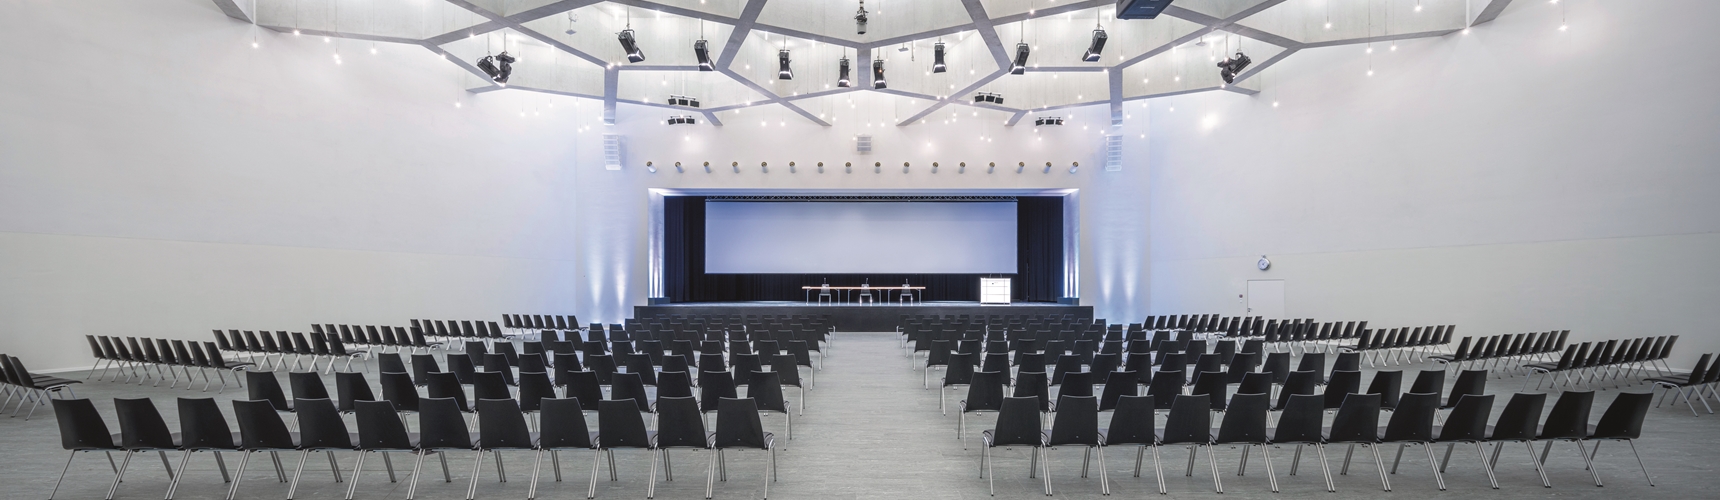 Plenarsaal des Kongresszentrums Davos